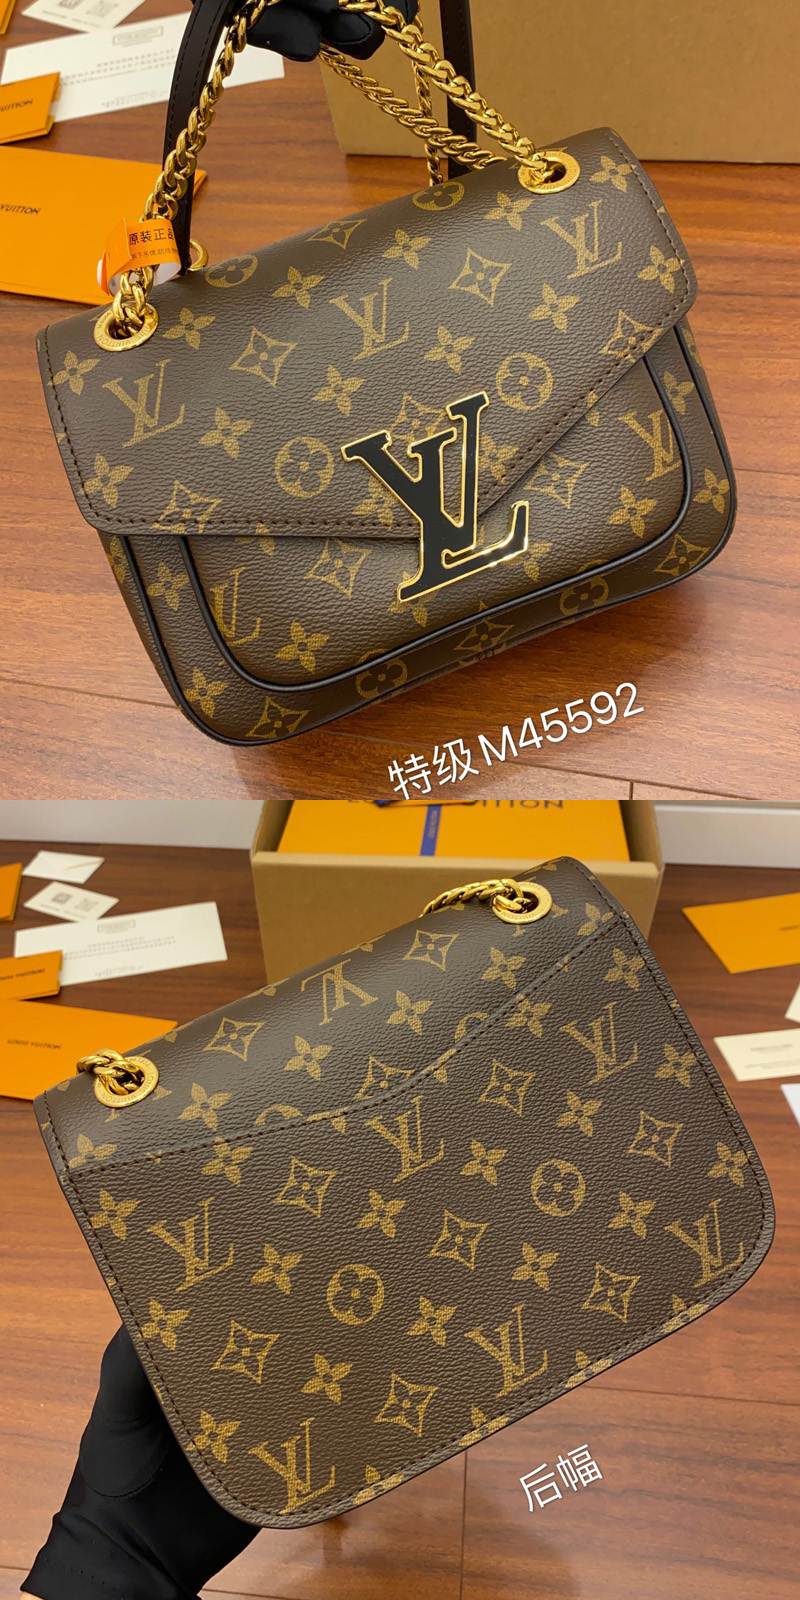 Jual TAS Louis Vuitton PASSY Chain Bag #M45413